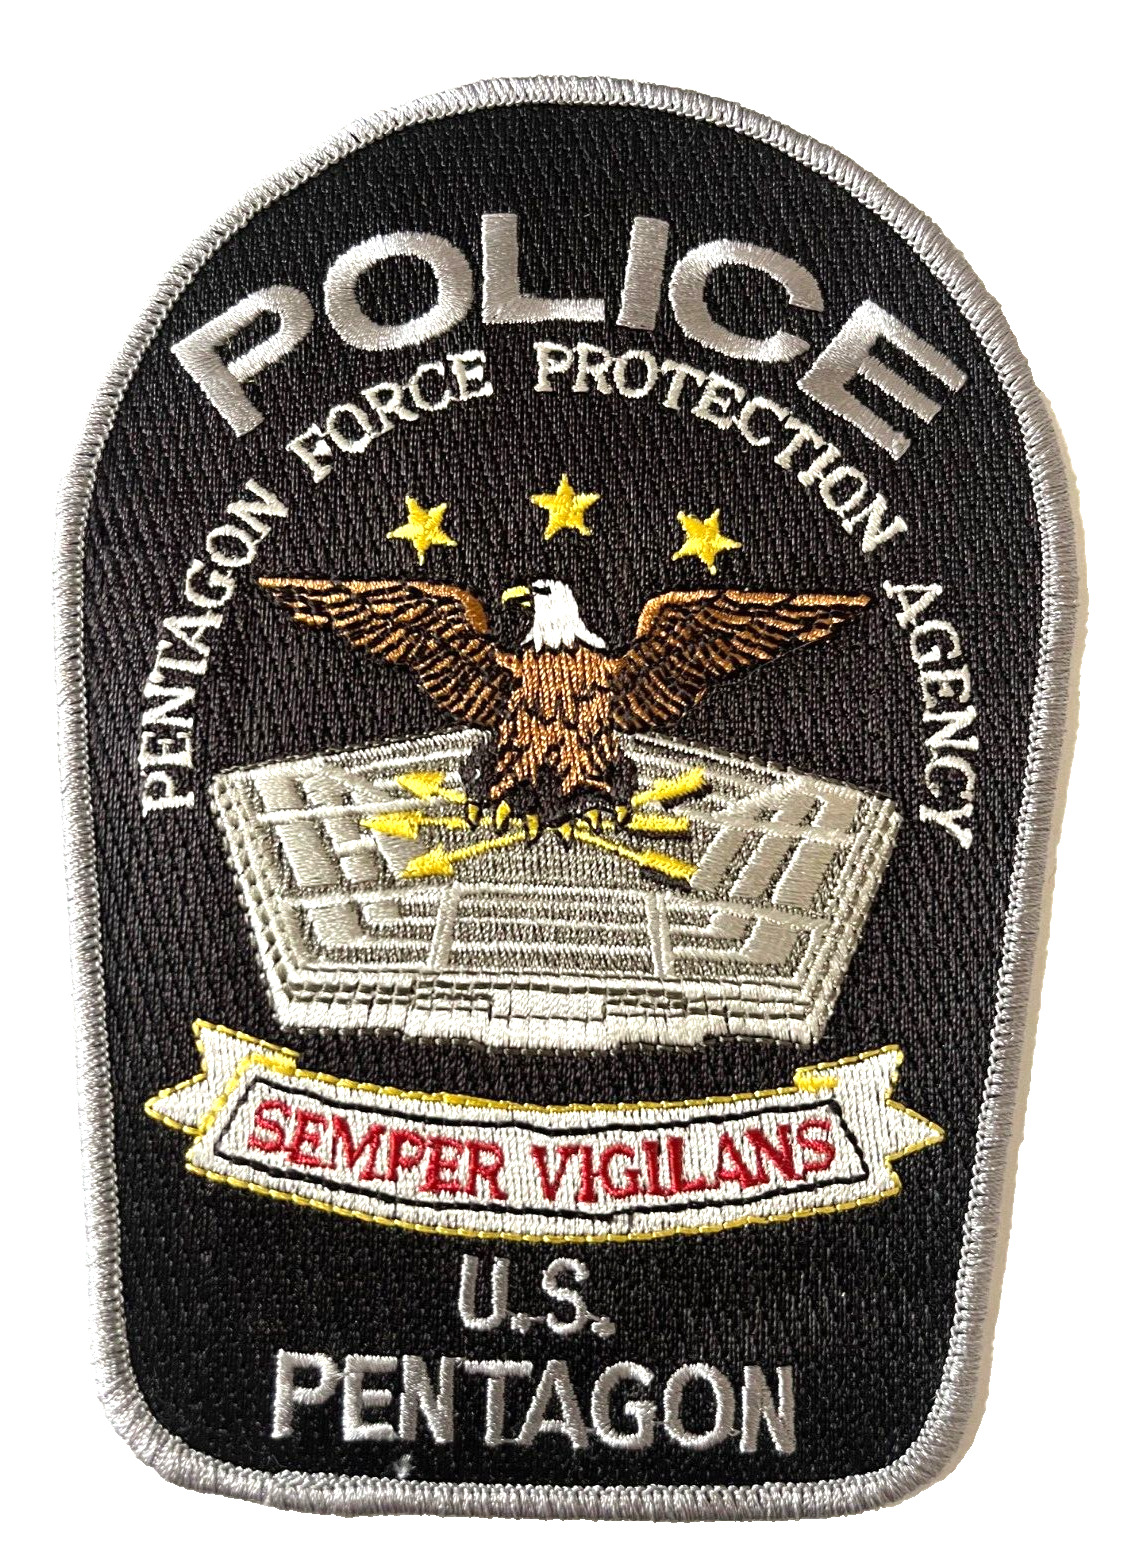 PENTAGON FORCE PROTECTION AGENCY PATCH (DD) U.S. PENTAGON POLICE